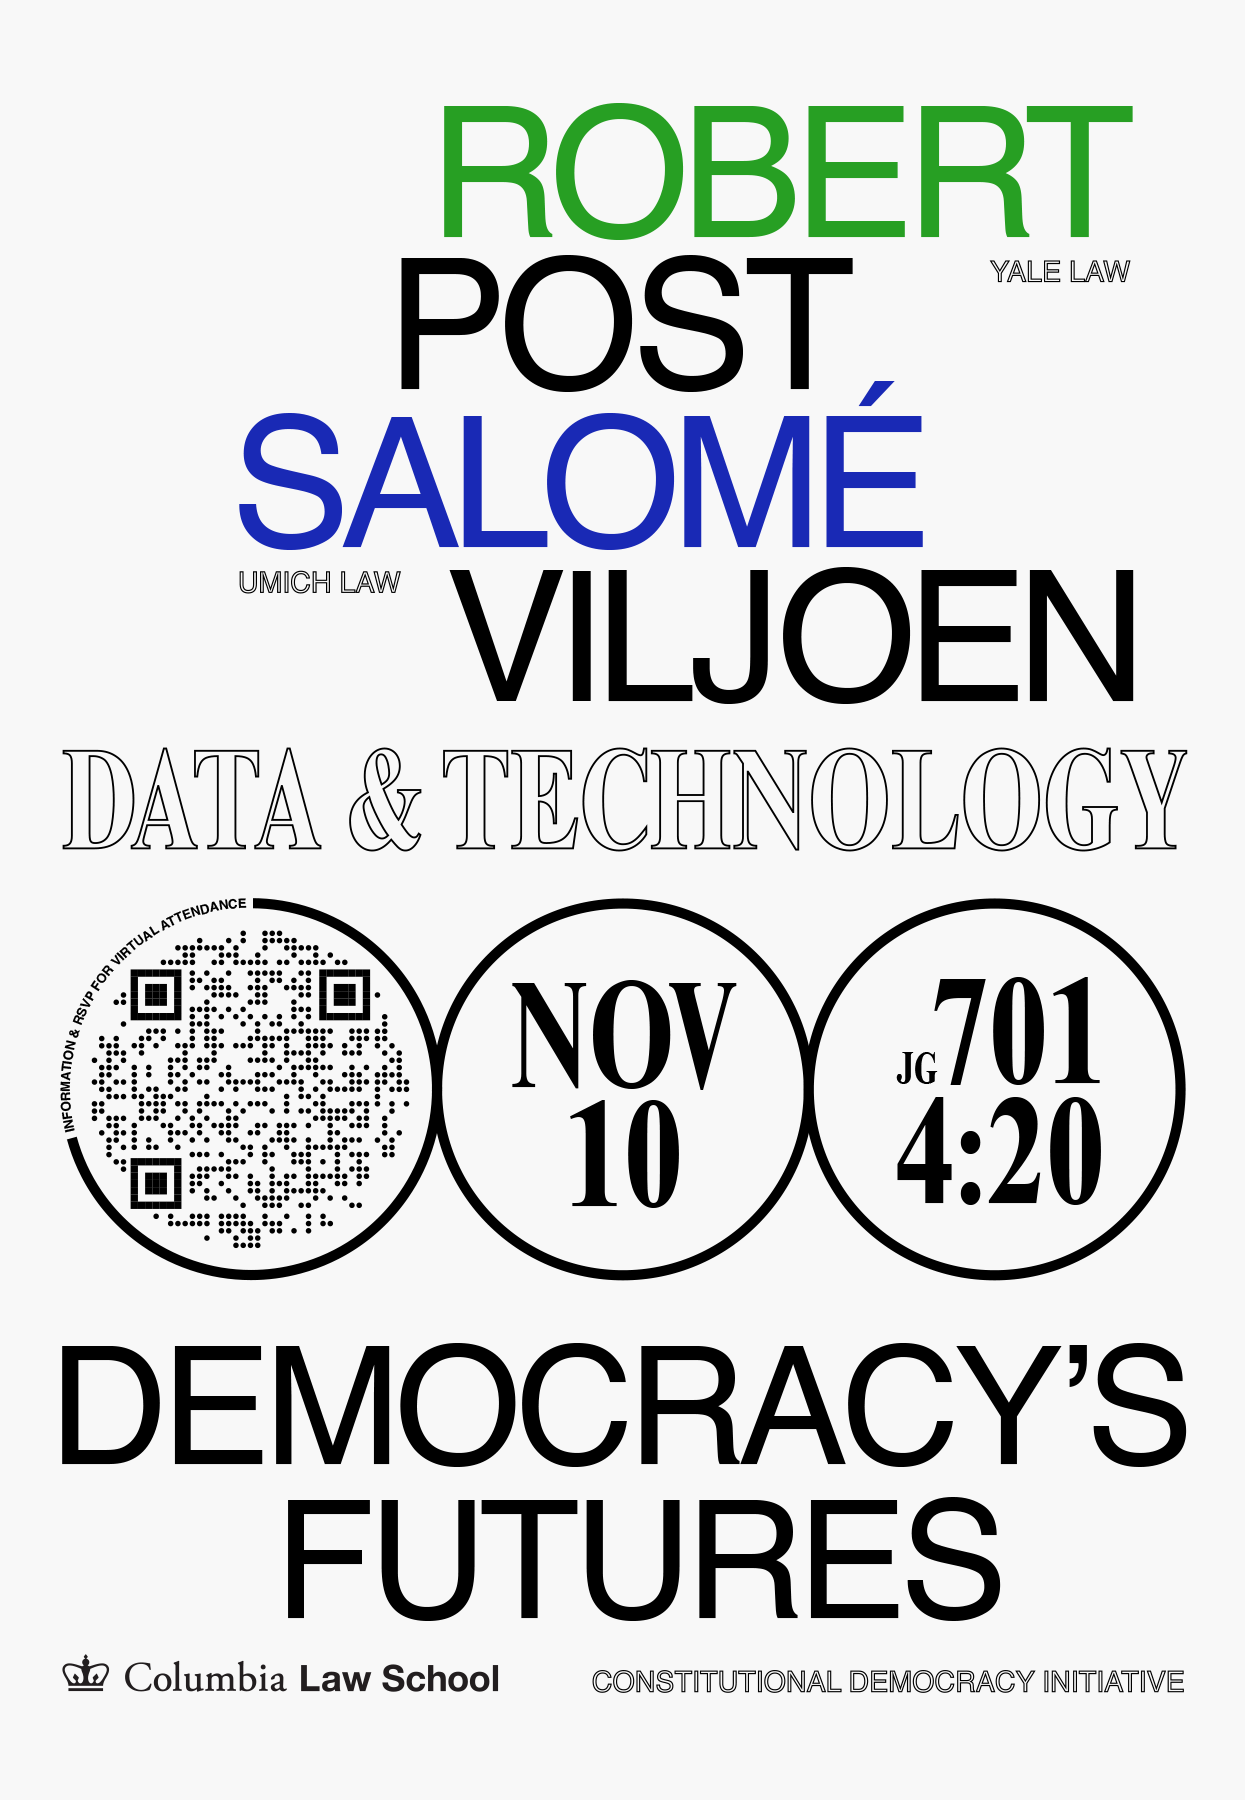 Democracy's Futures - "Data & Technology"